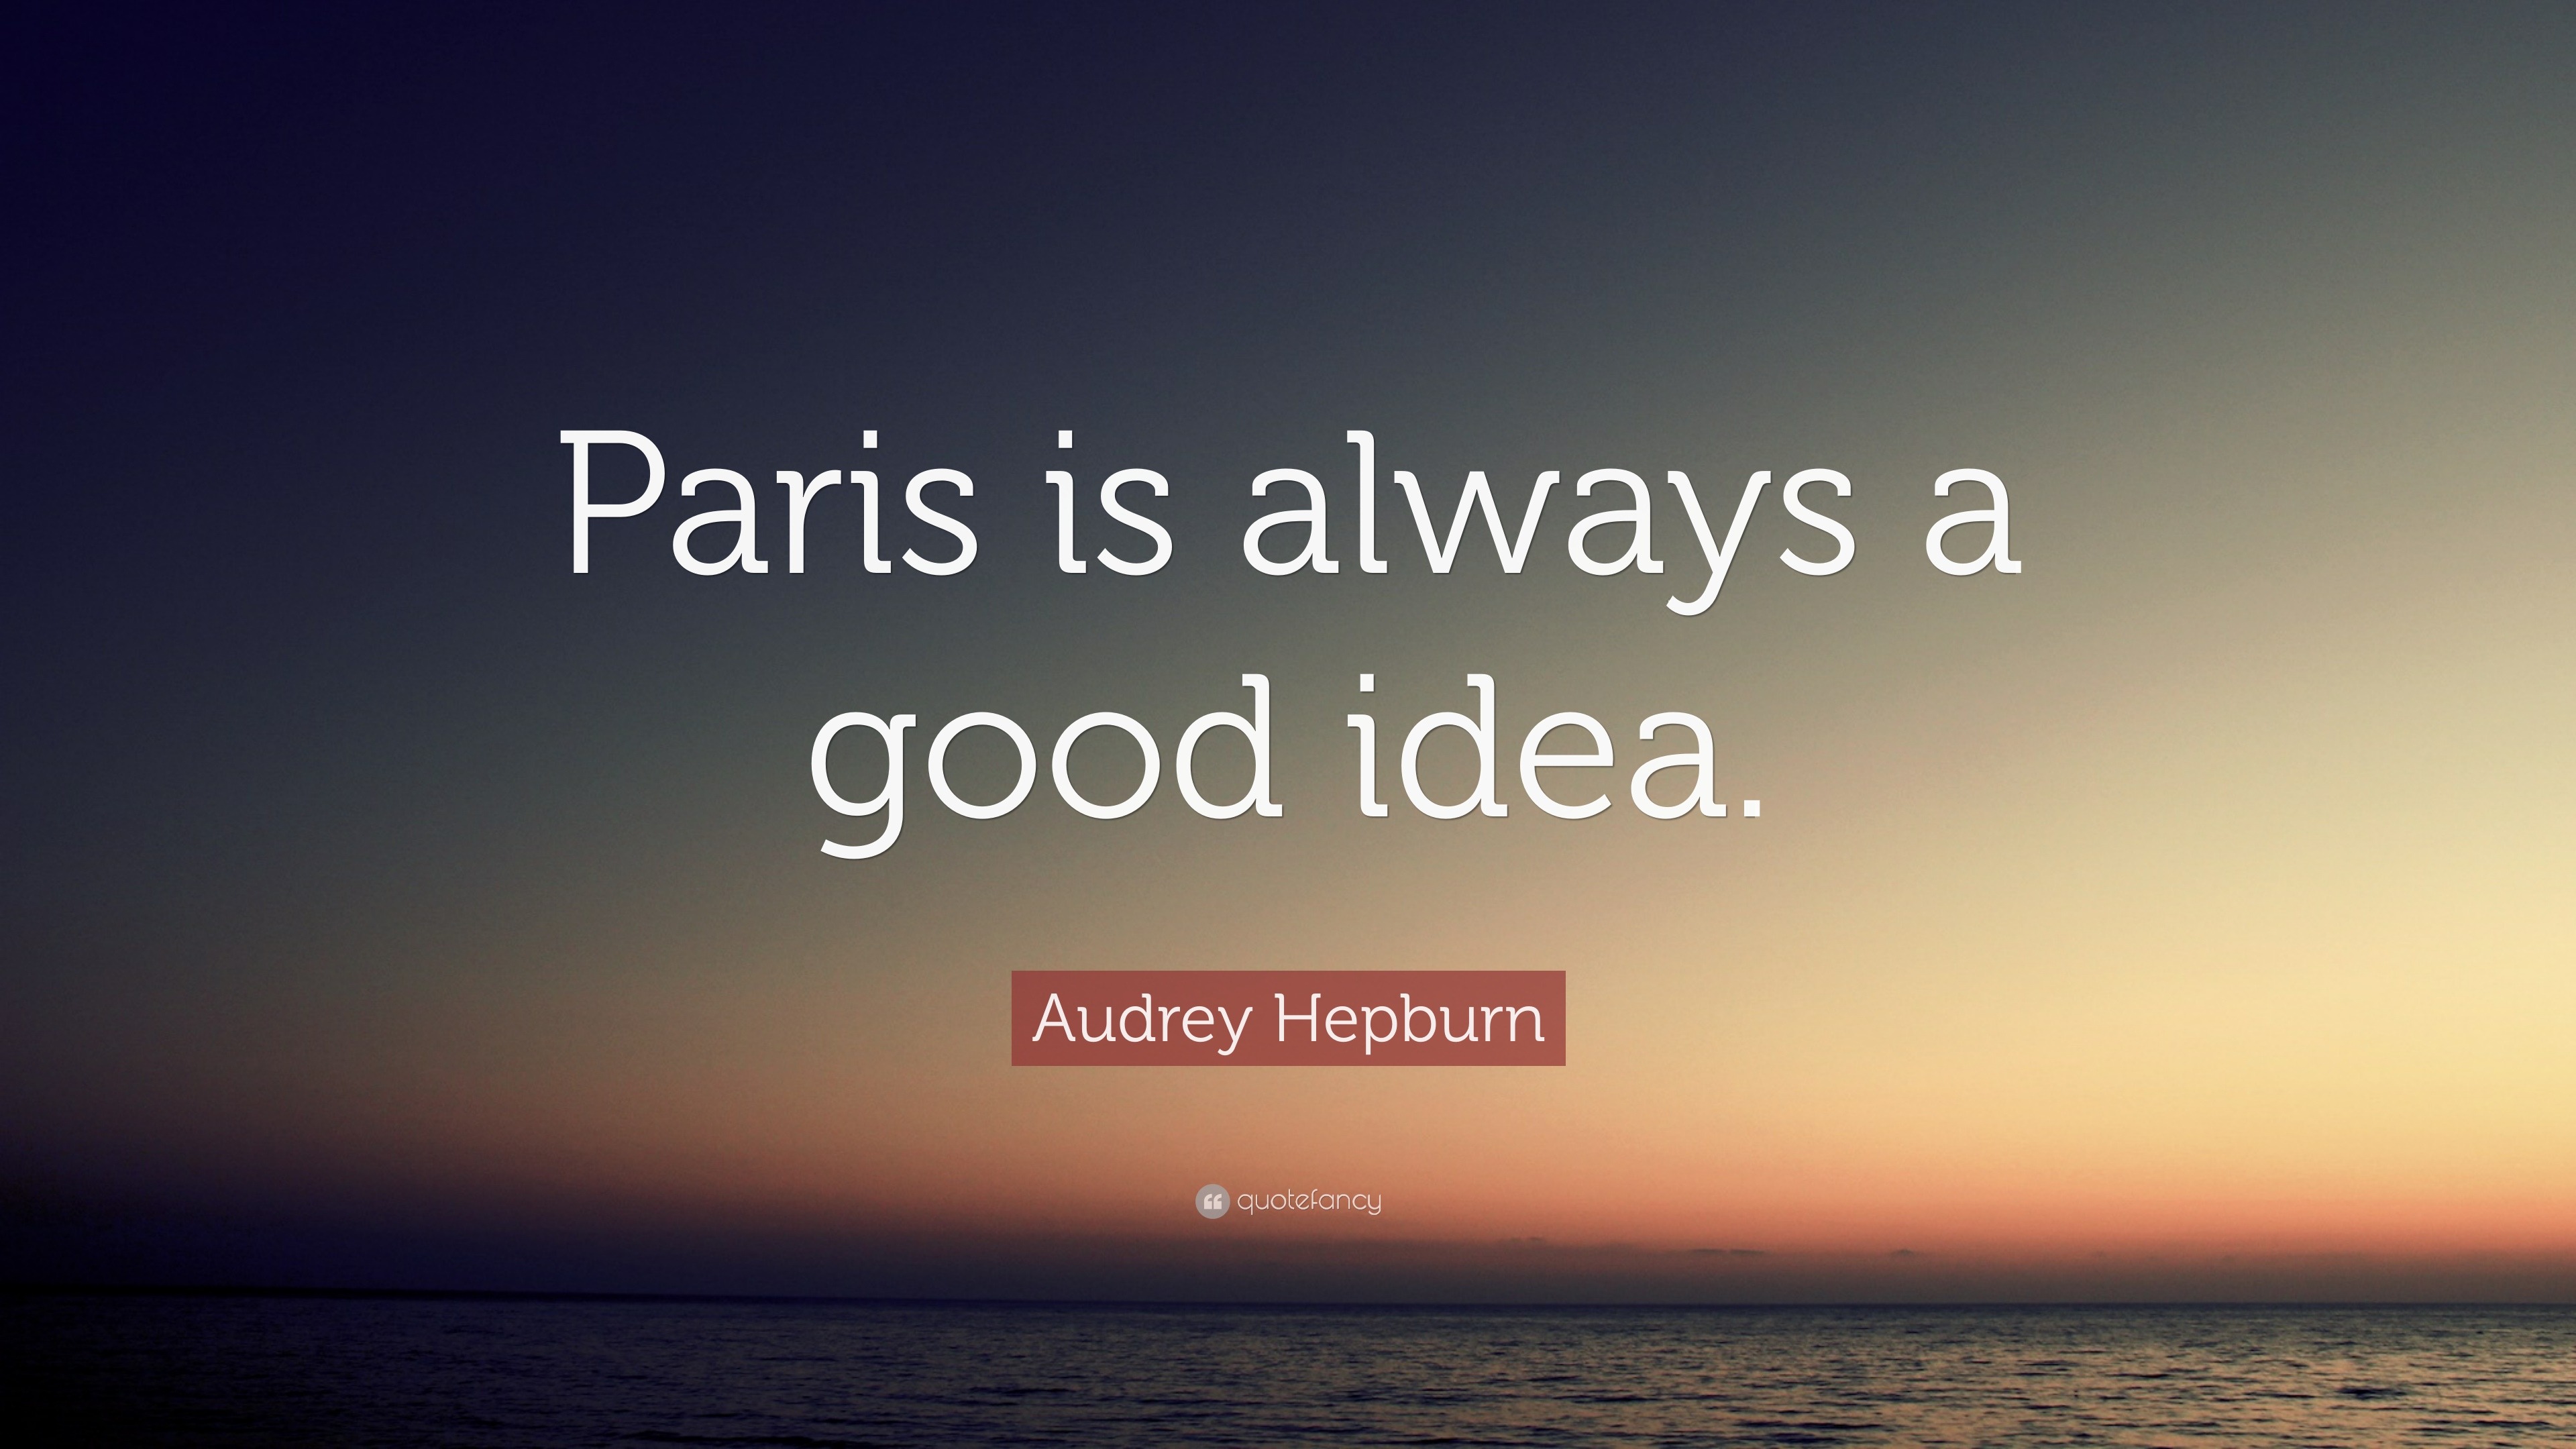 Audrey Hepburn Quote: “Paris is always a good idea.”